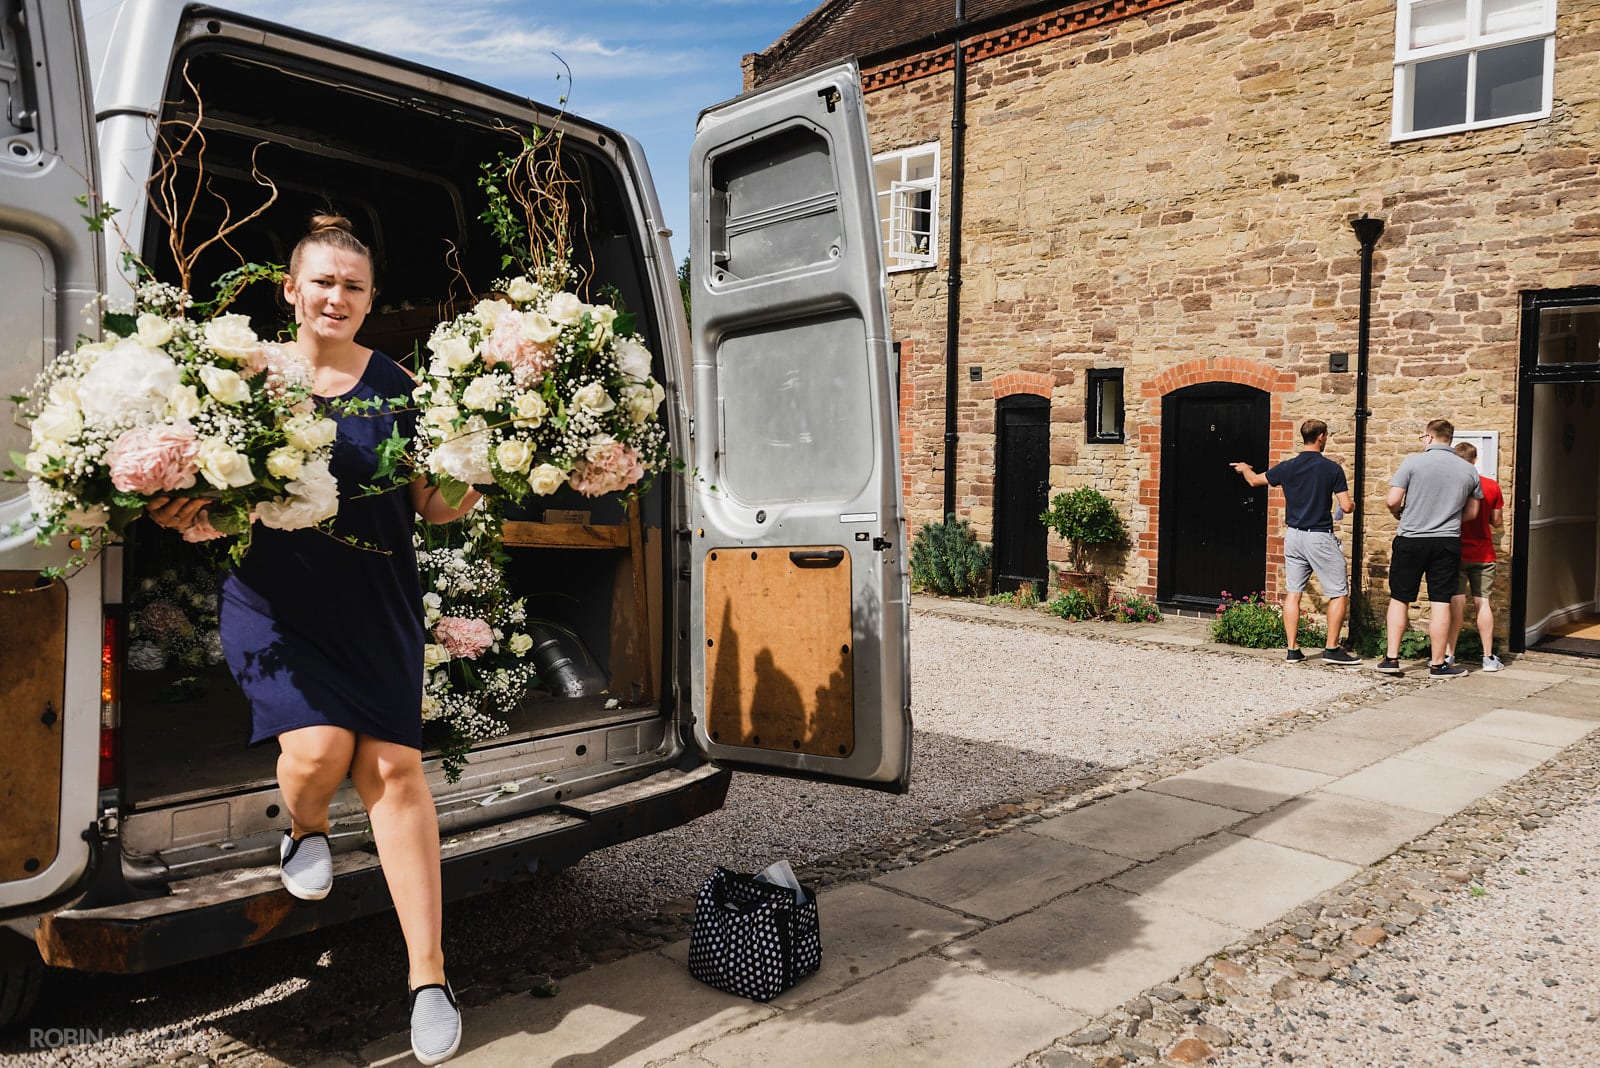 Wedding florist arrives and unloads flowers from her van